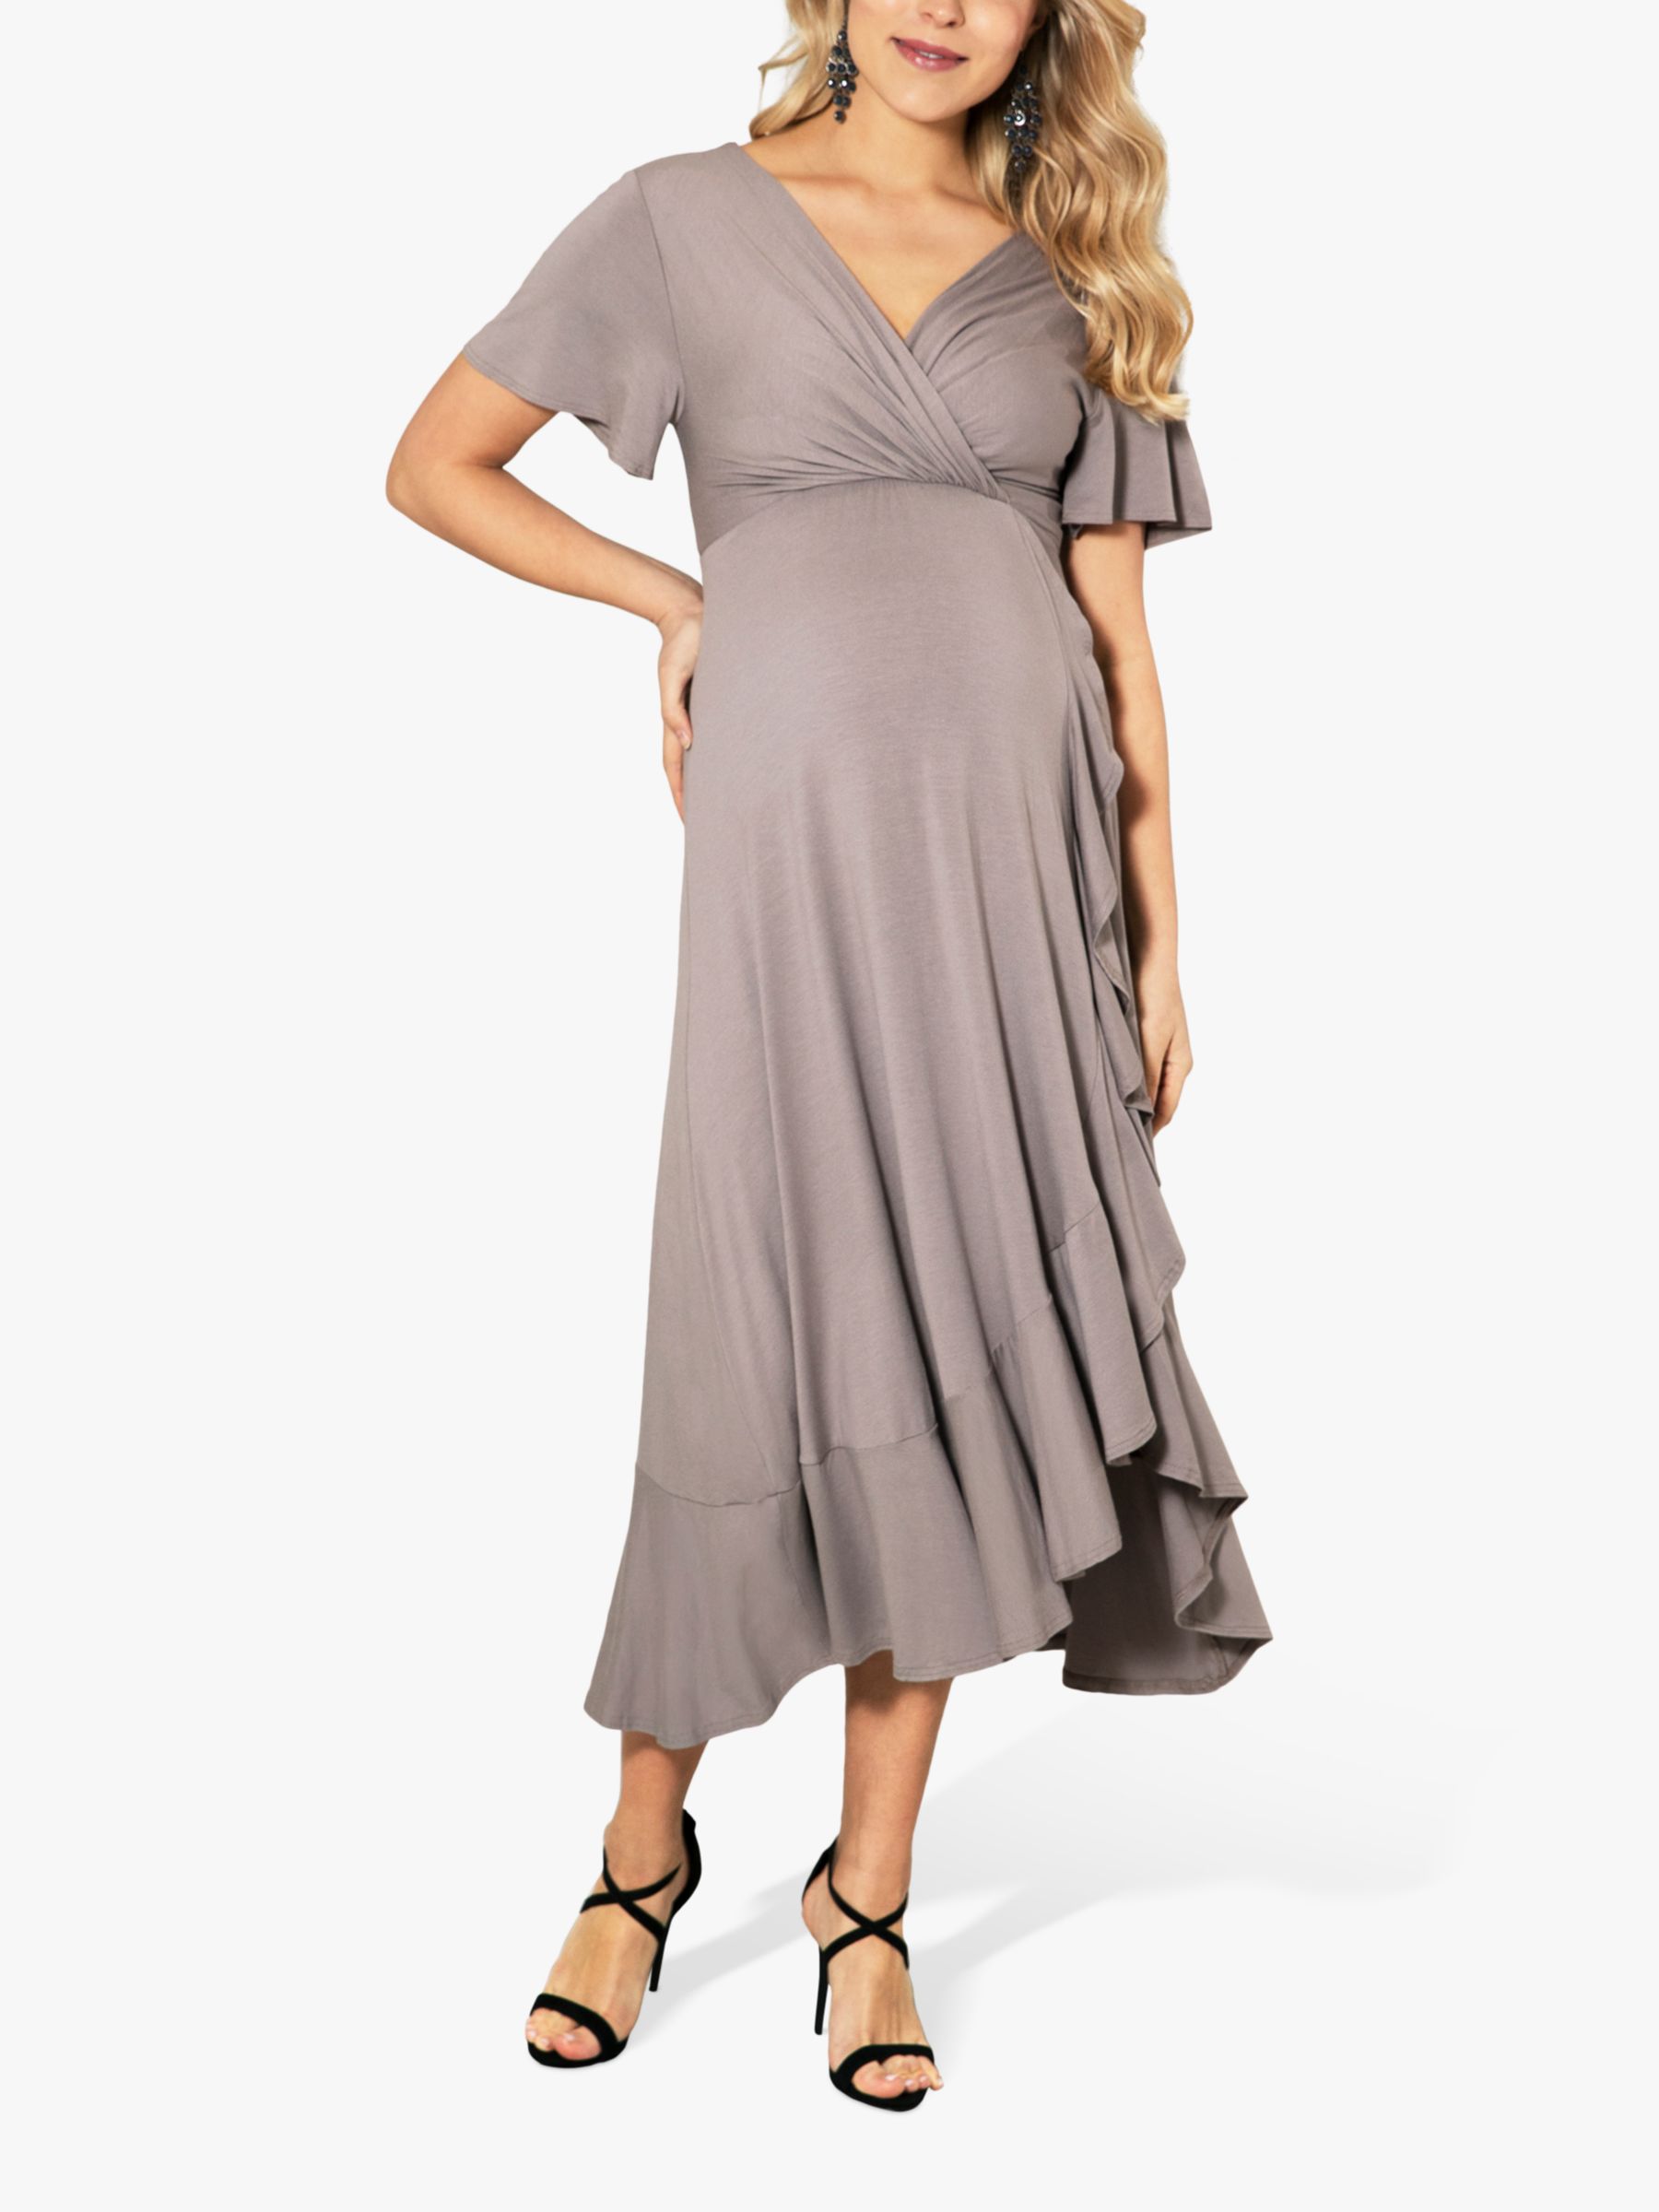 Tiffany Rose Plain Waterfall Midi Maternity Dress